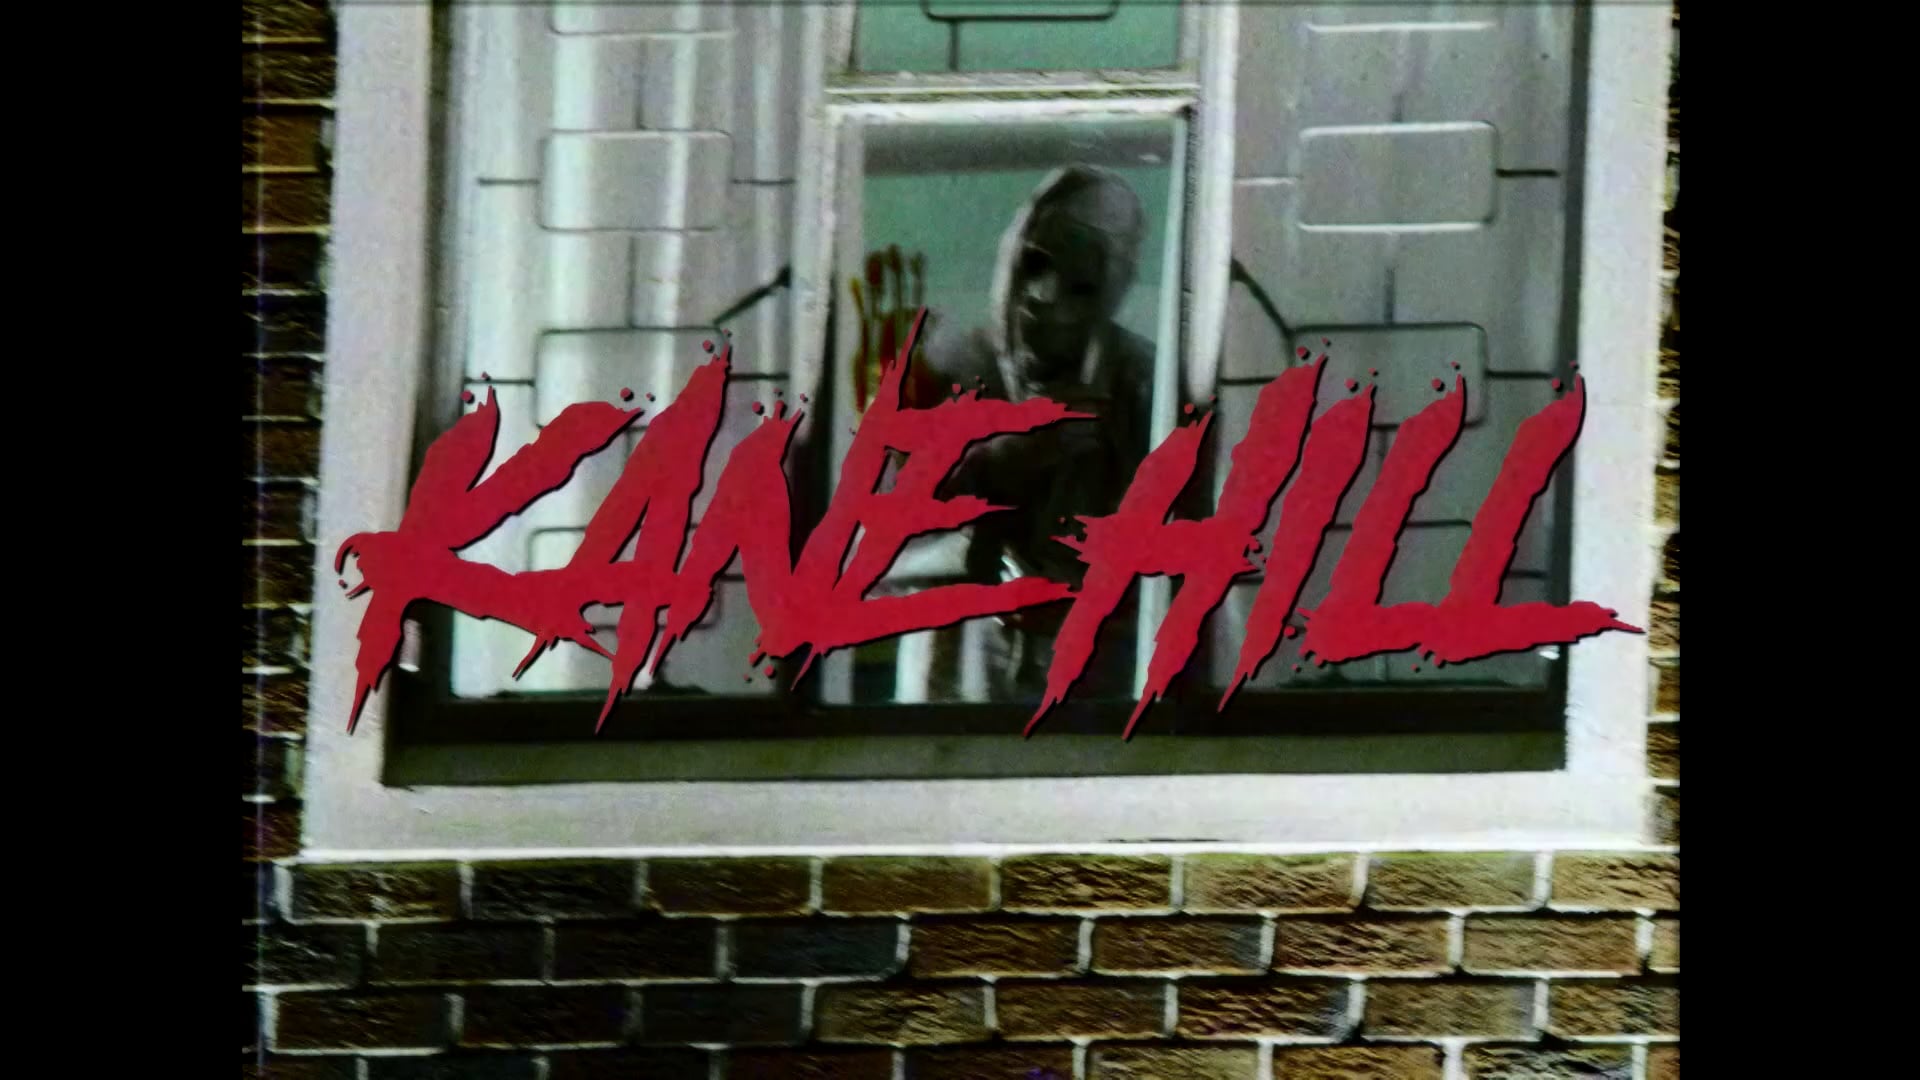 104: Kane Hill